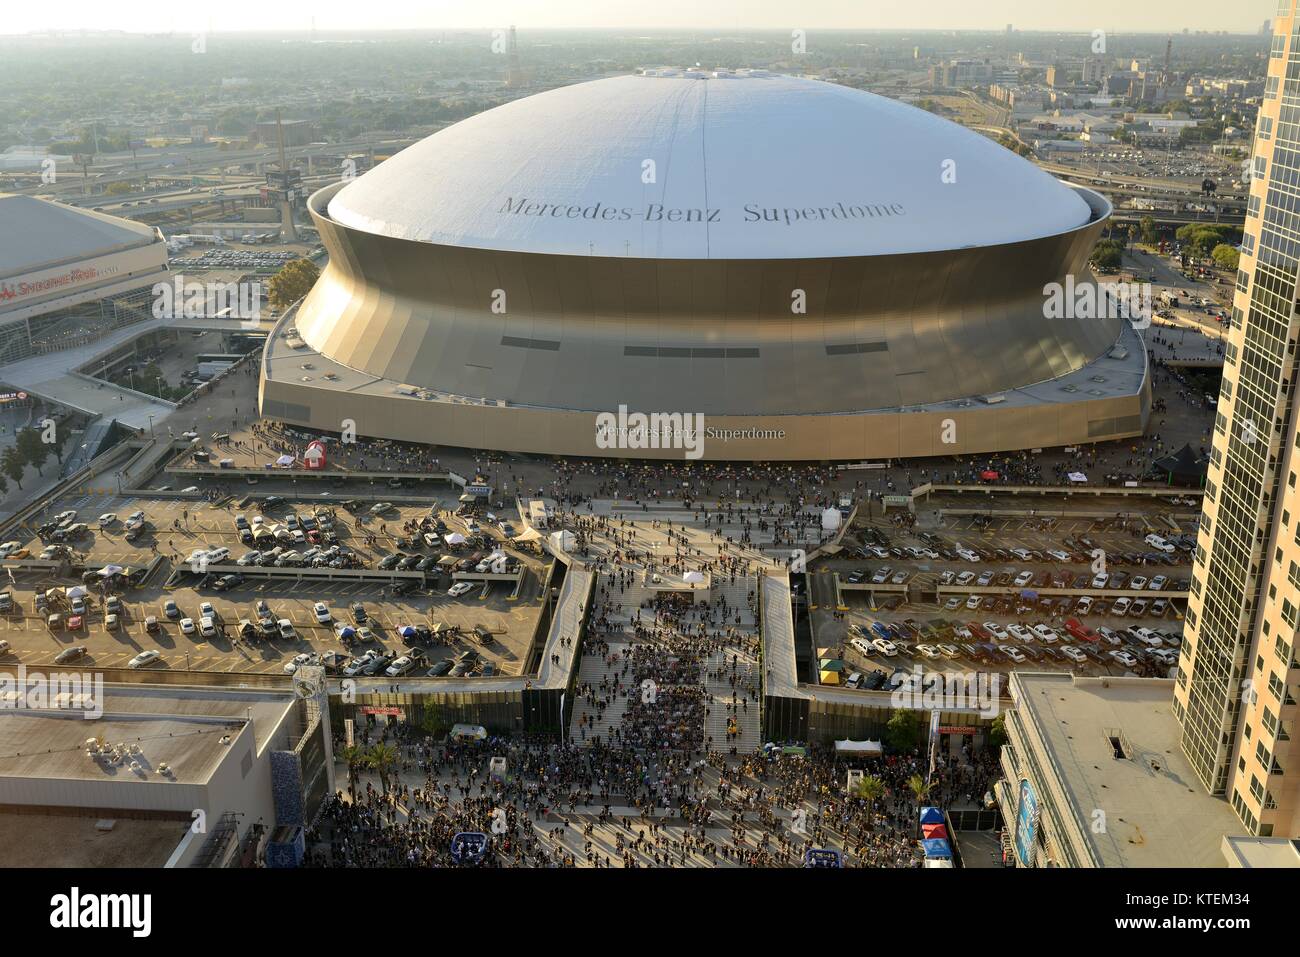 Superdome de New Orleans - tarde antes de Sunday Night NFL juego entre Green Bay Packers vs. New Orleans Saints, el Superdome estaba lleno de fans. Foto de stock